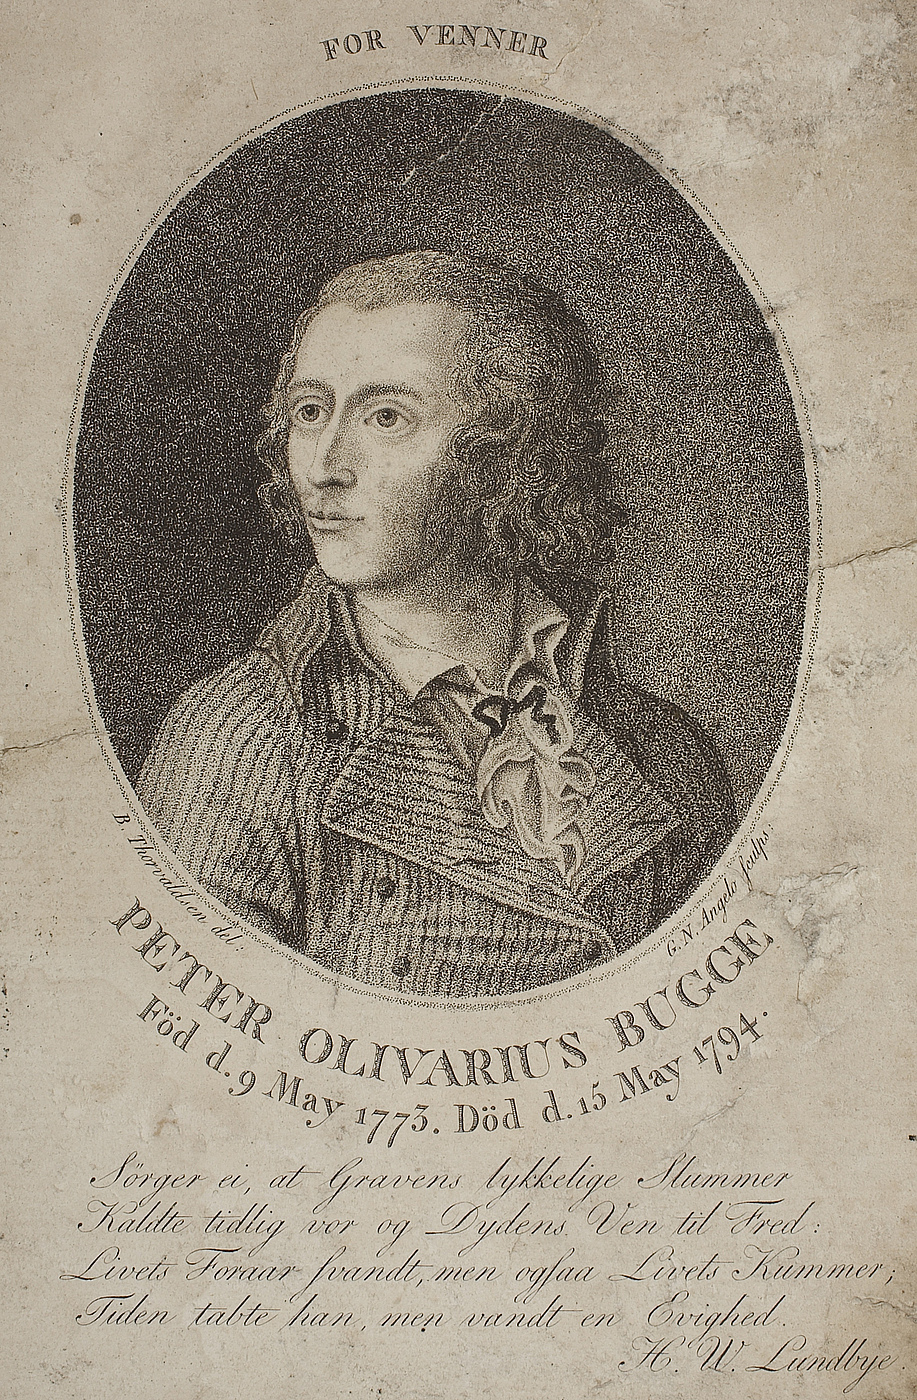 Peter Olivarius Bugge